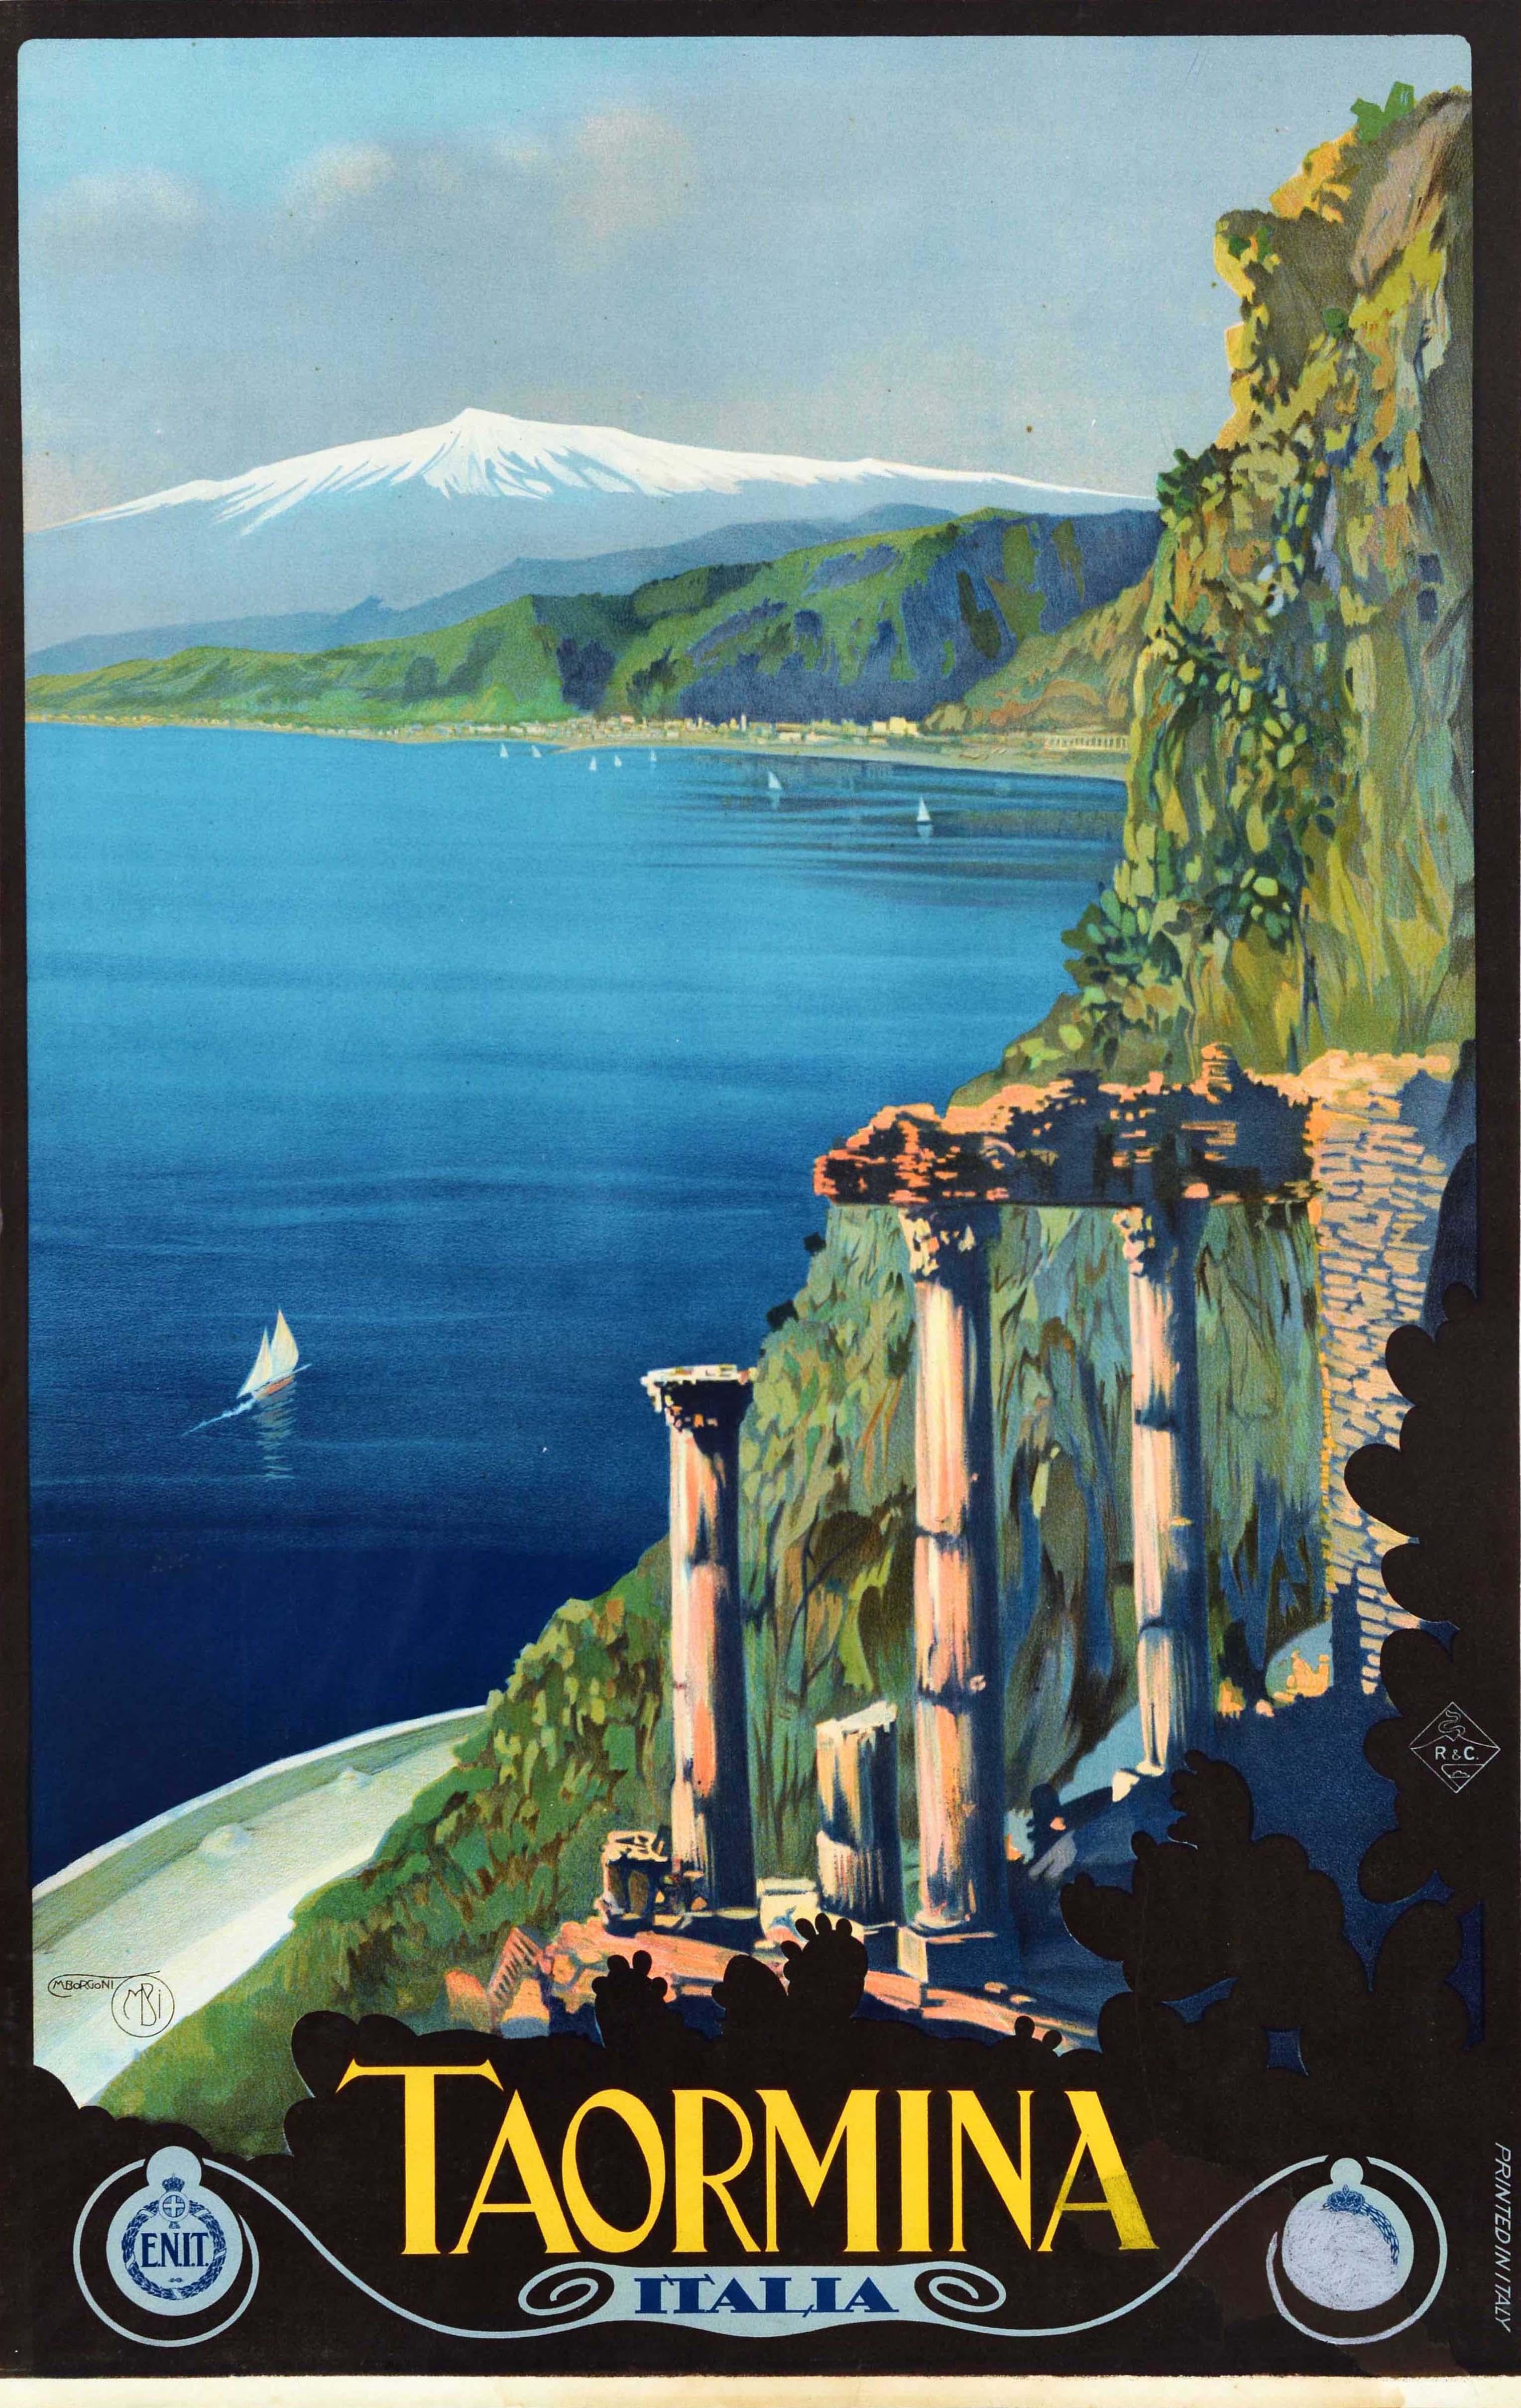 Unknown Print - Original Vintage Travel Poster Taormina Sicily ENIT Italy Borgoni Mount Etna Art